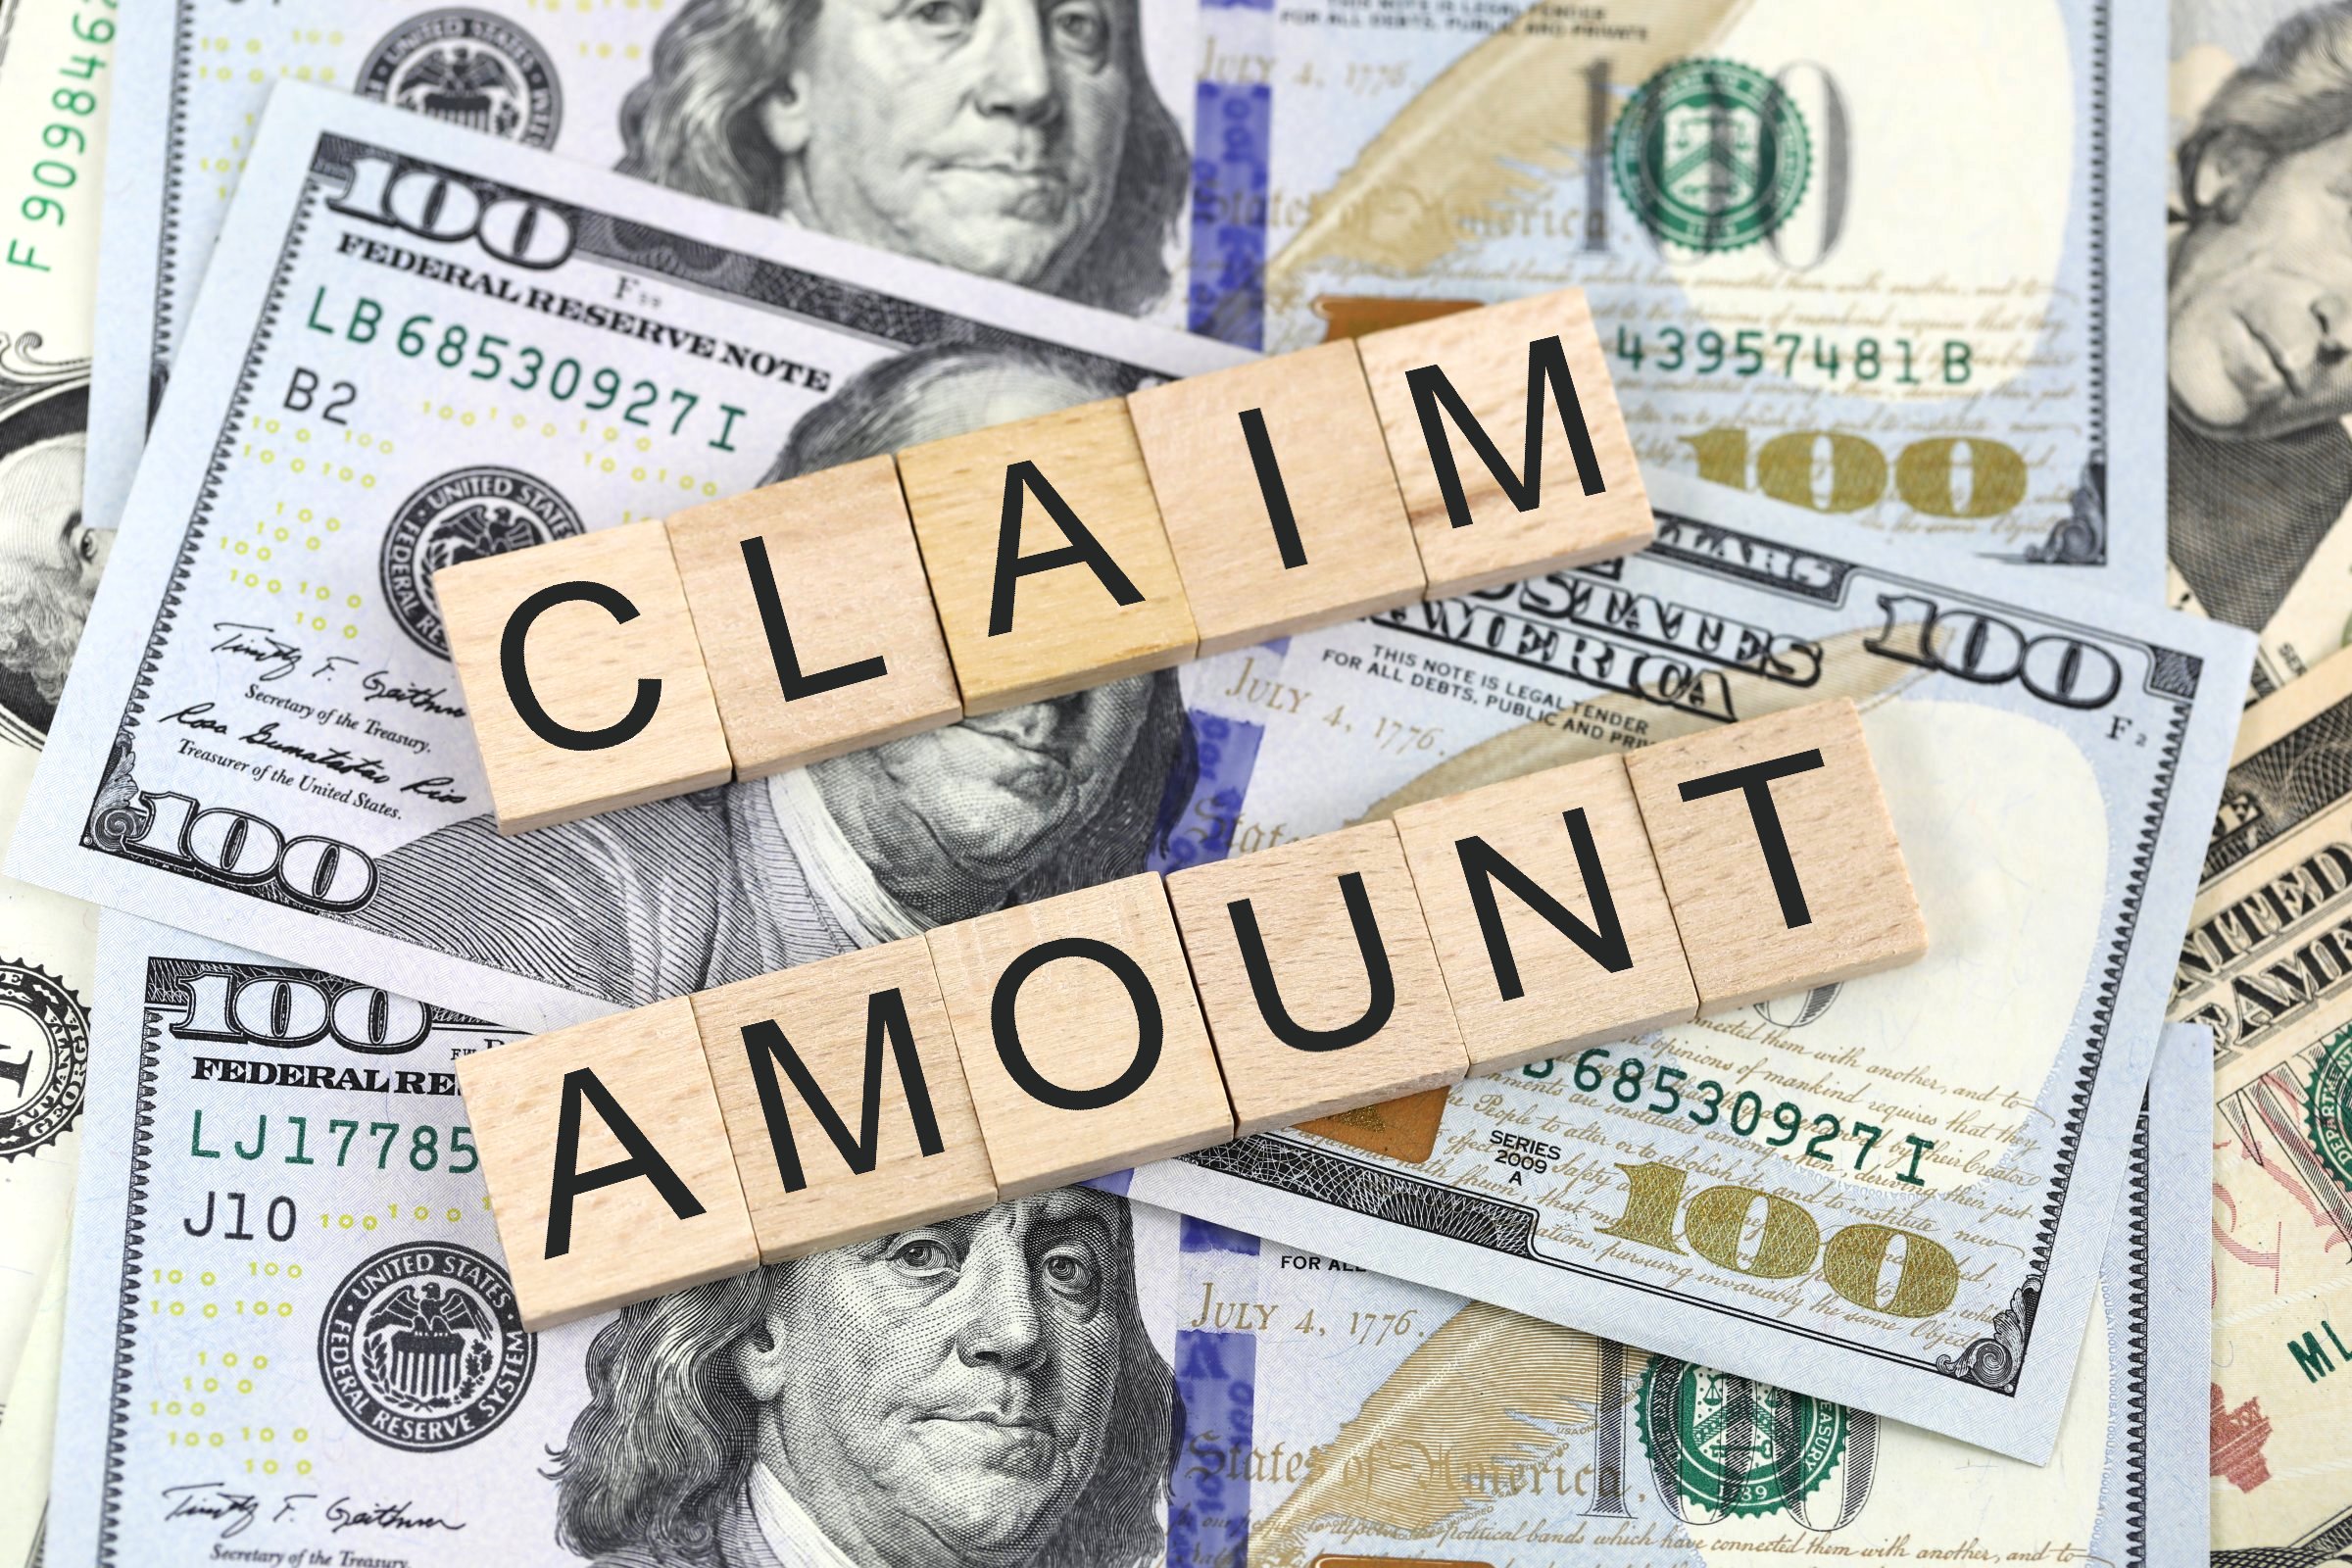 claim amount